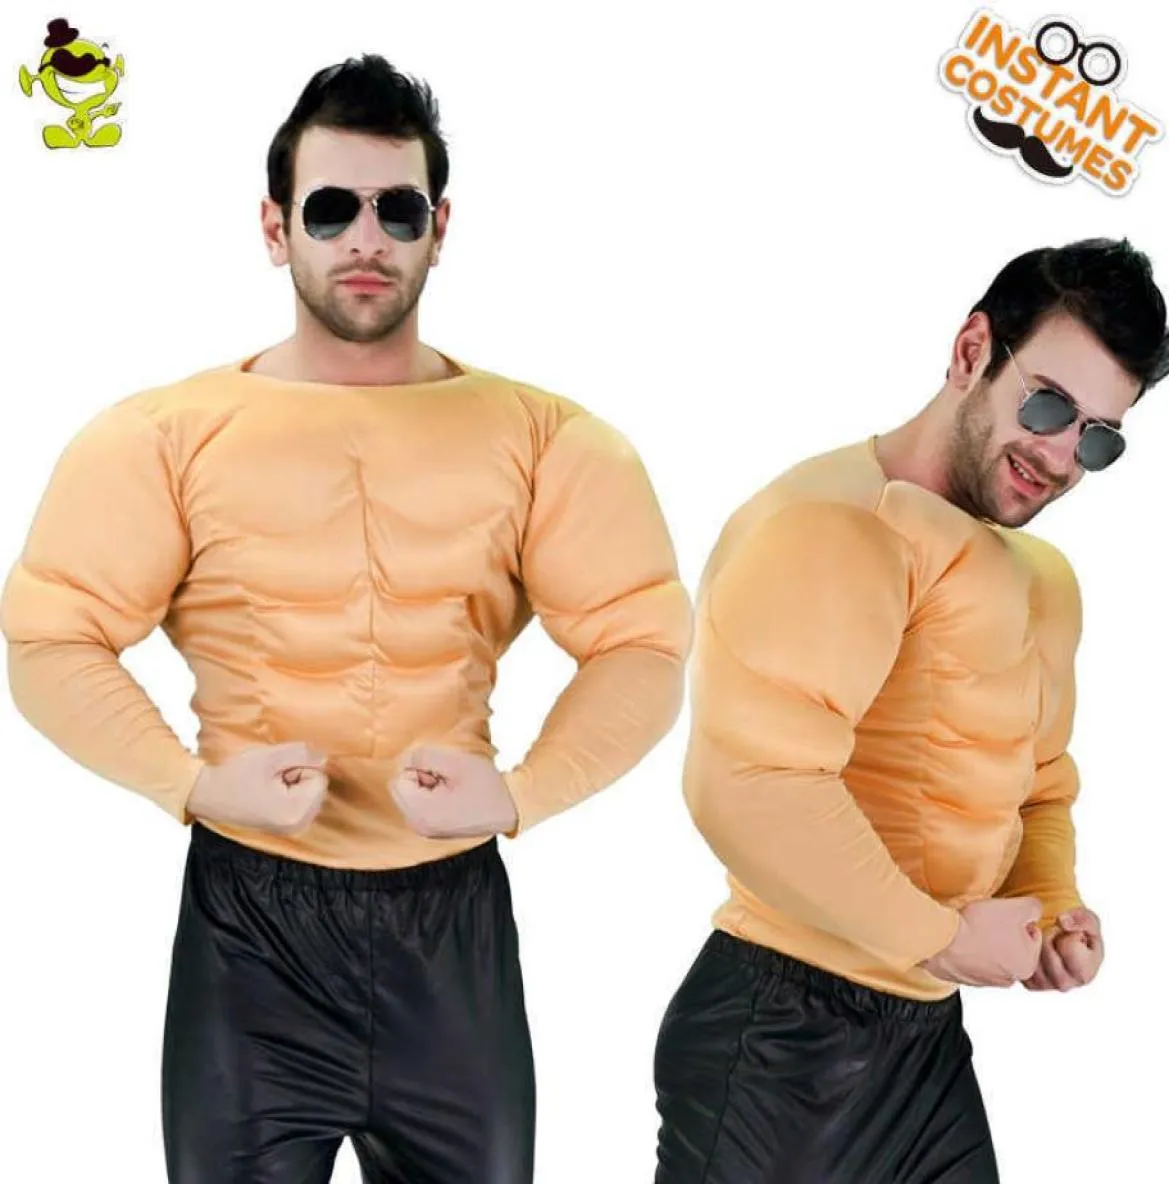 Nuevo llegada Muscle Top Men Muscle Top Costumes para adultos Cosplay Halloween Funny Strong Hombre Role Fiesta de juego G09255963698